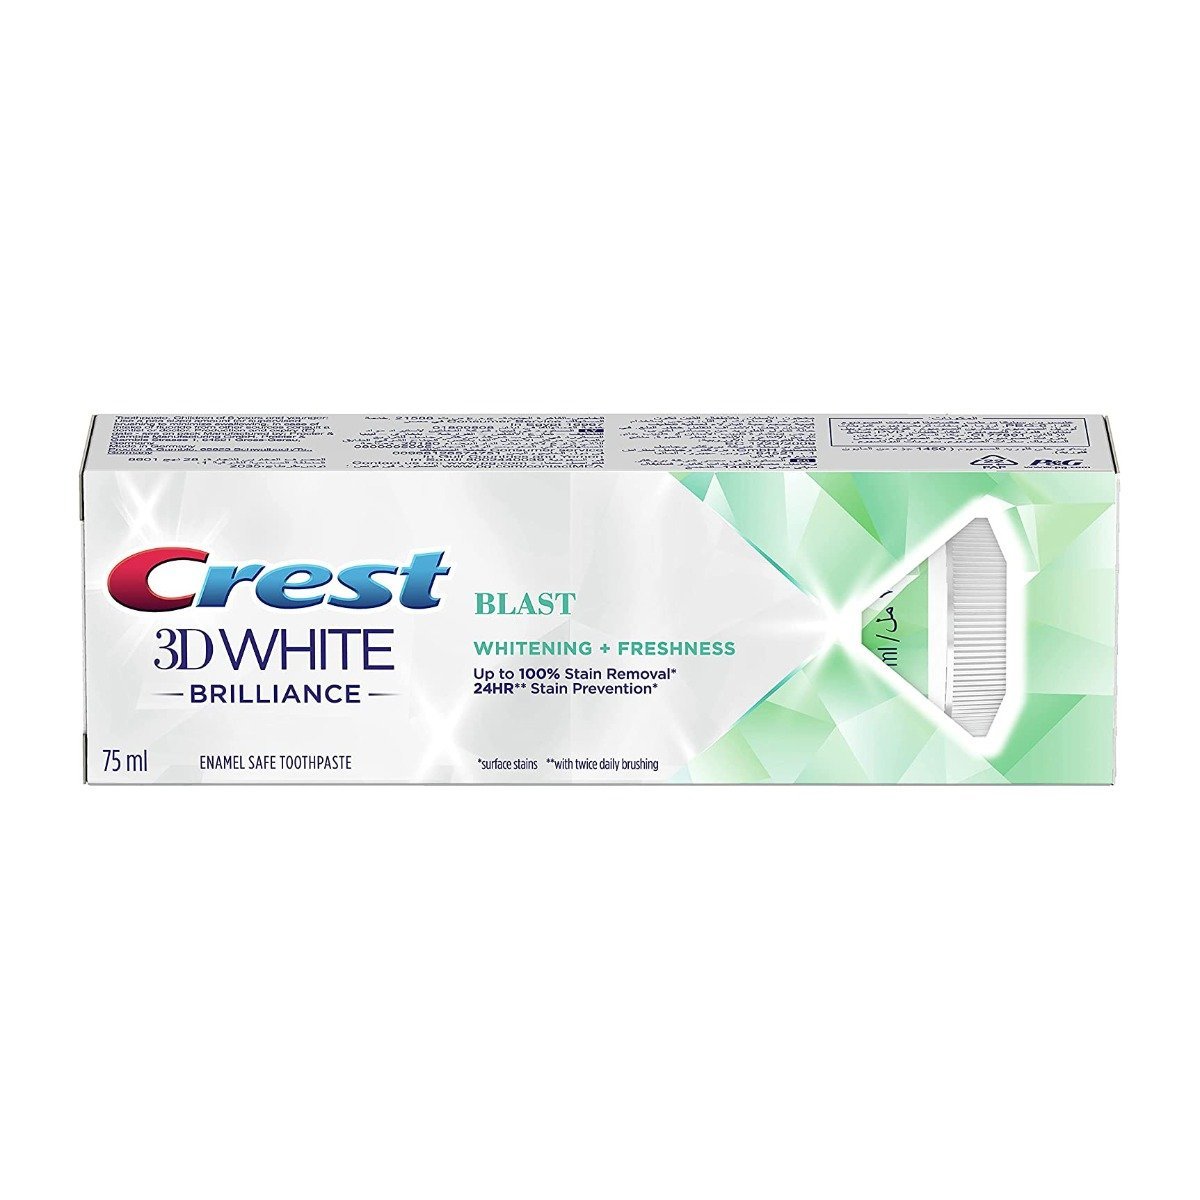 Crest 3D White Brilliance Blast toothpaste - 75ml - Bloom Pharmacy